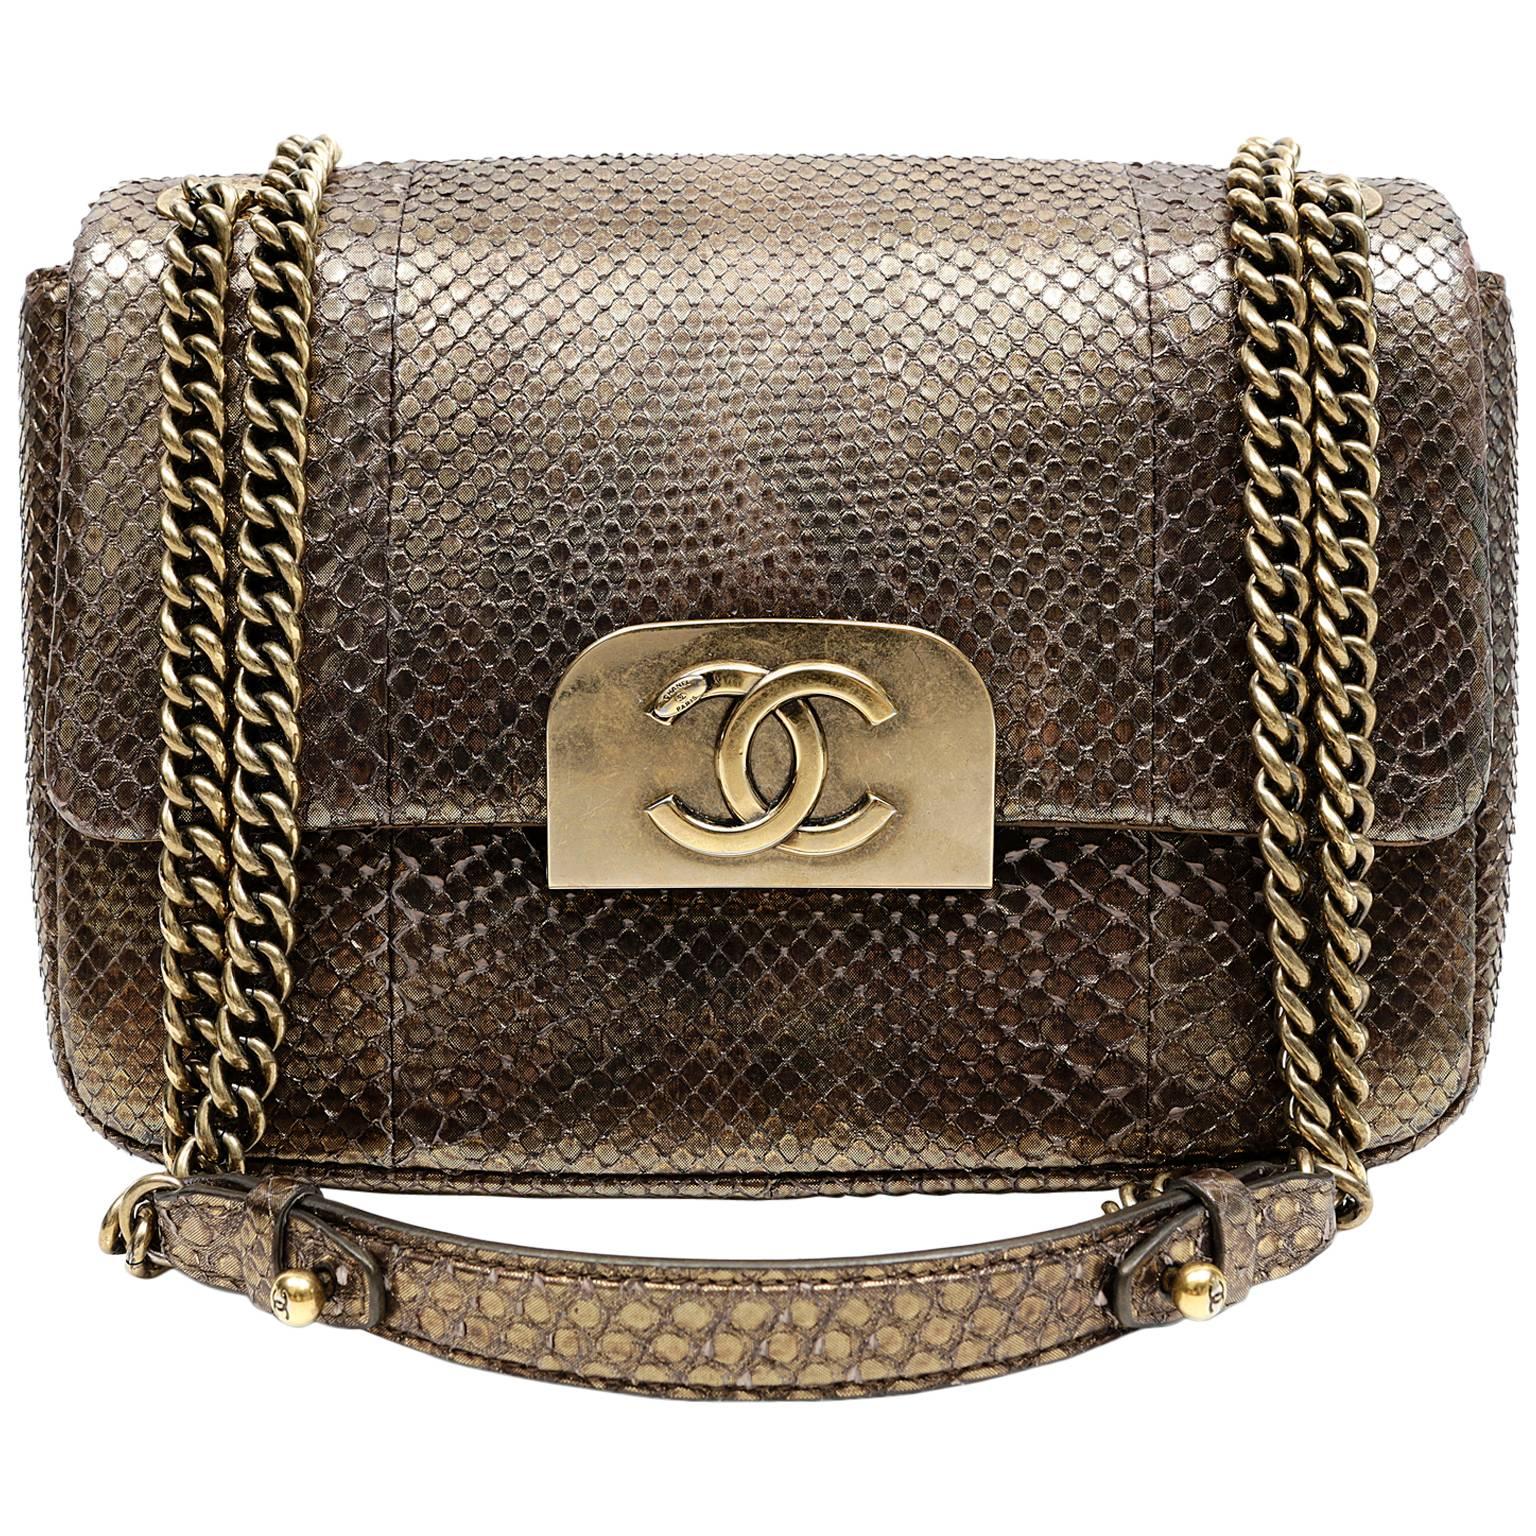 Chanel Dark Gold Metallic Python Shanghai Bag